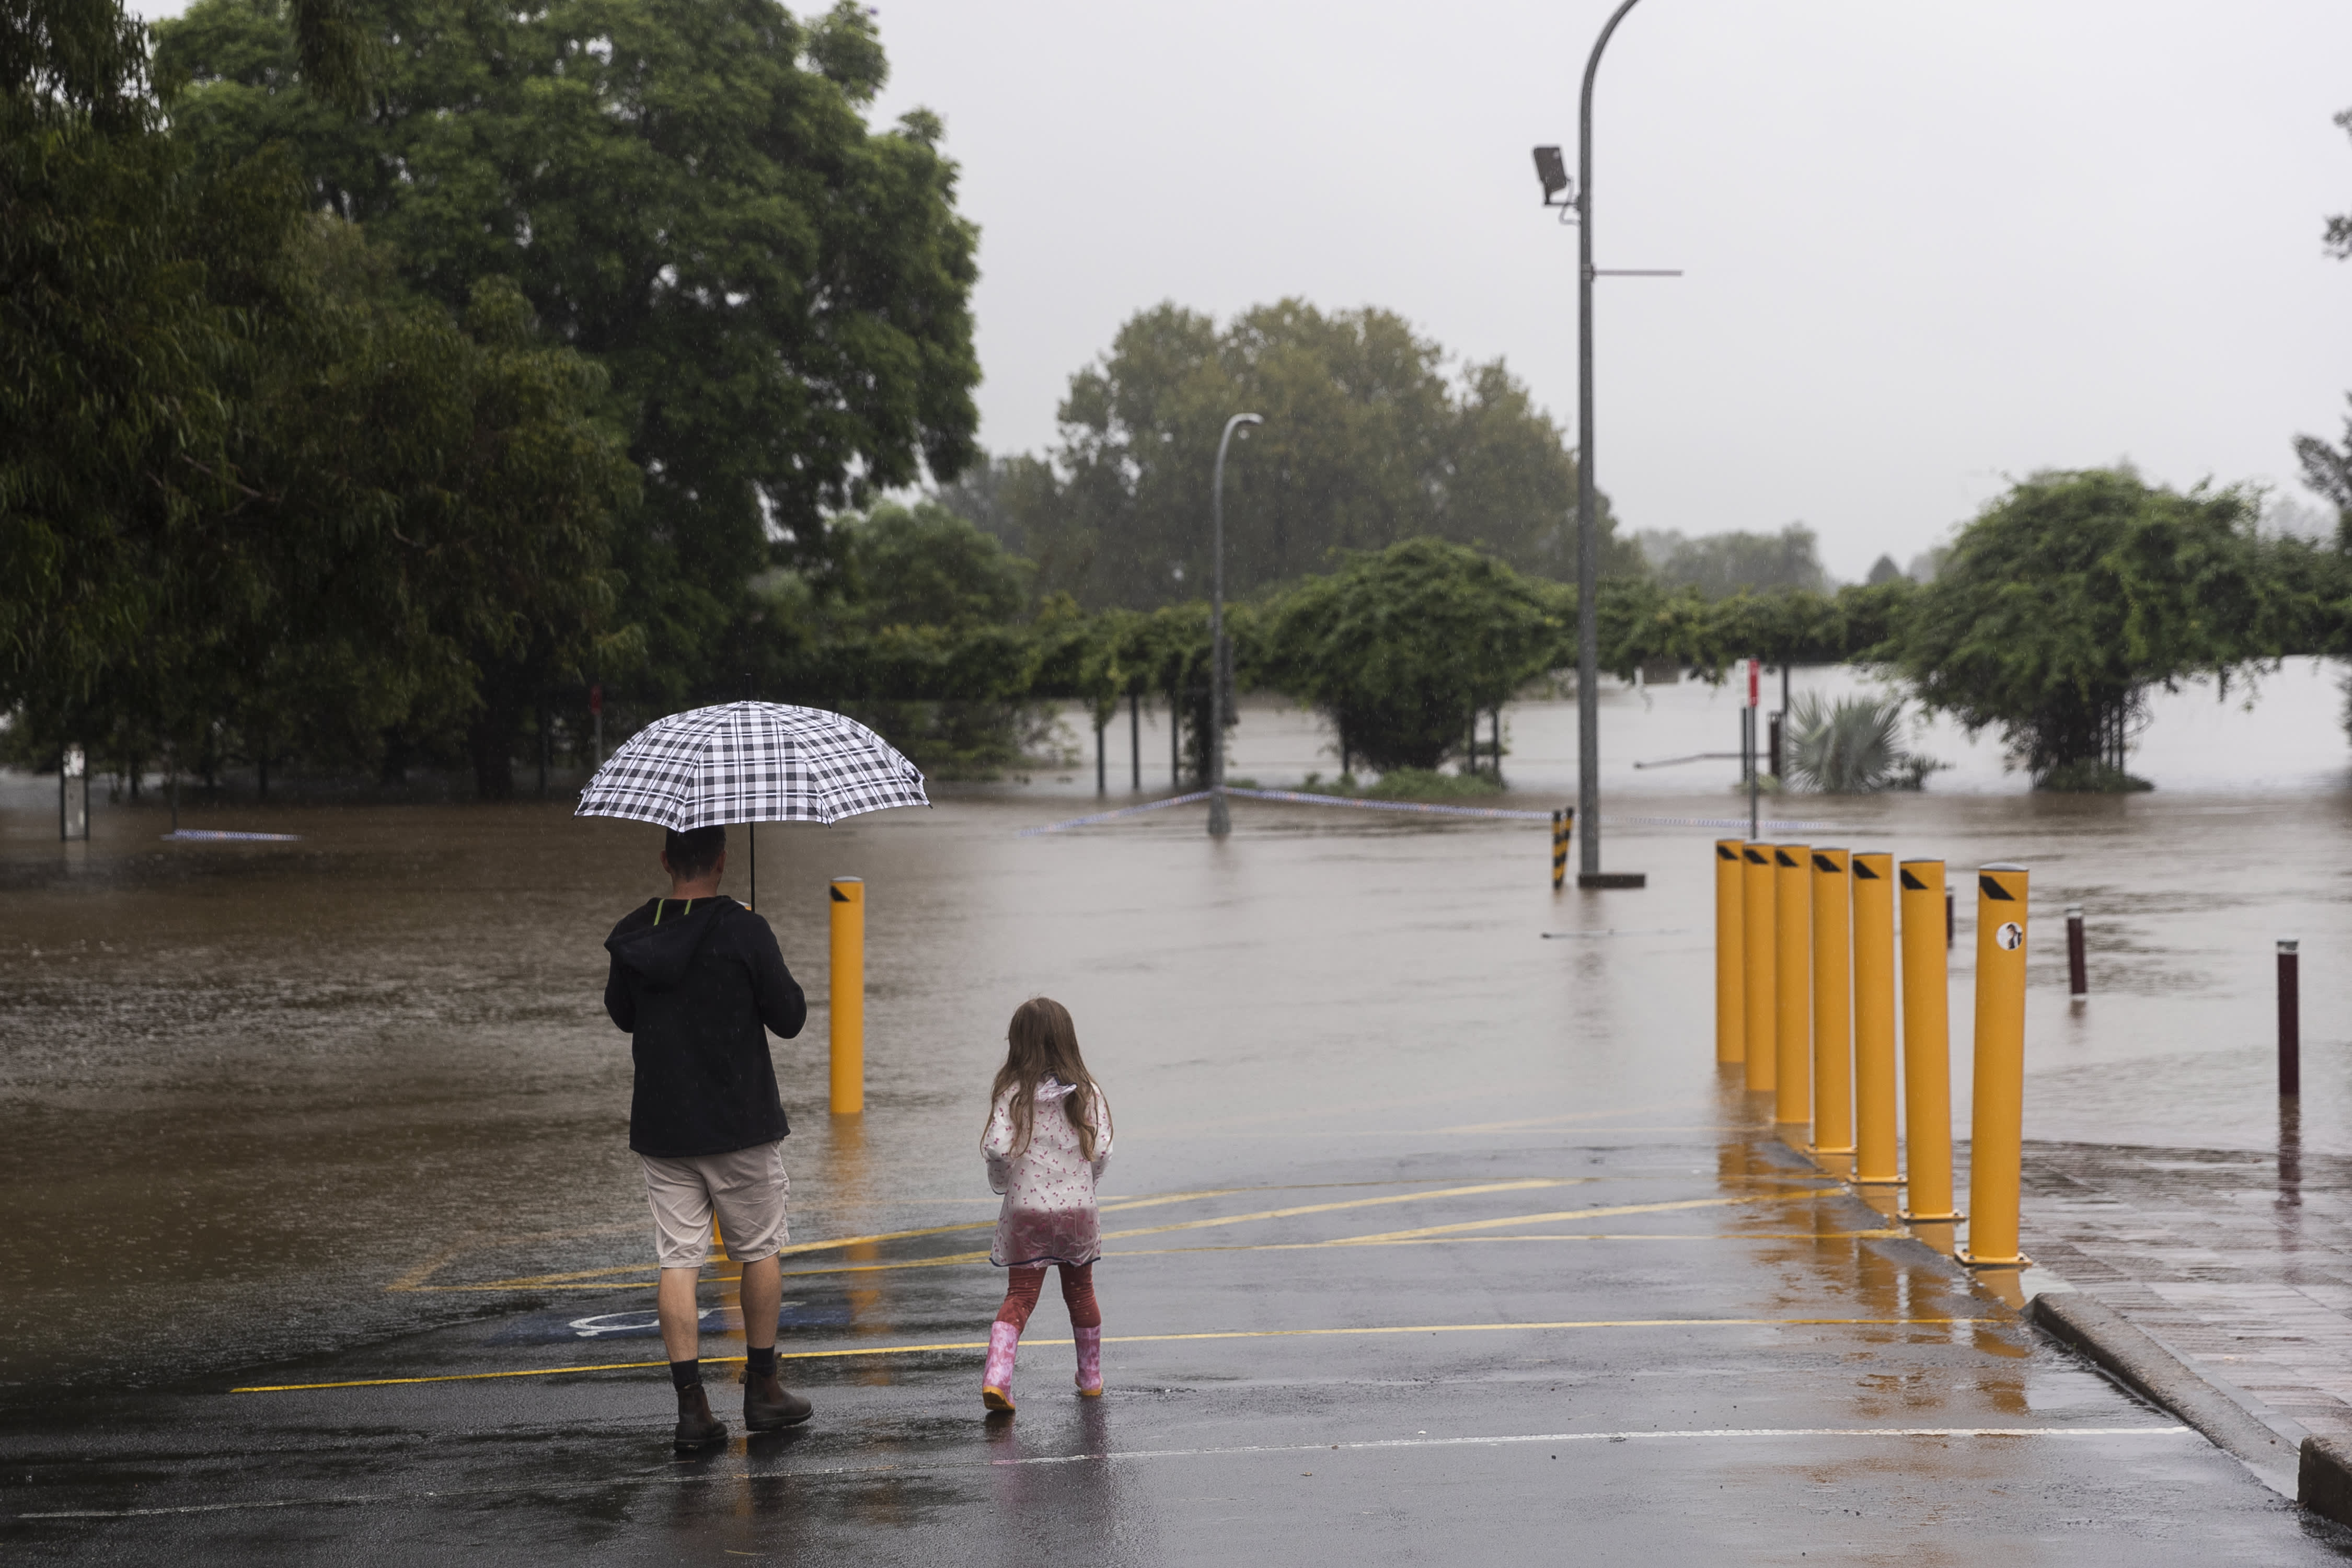 Sydney suburbs are evacuated due to flooding and heavy rain.